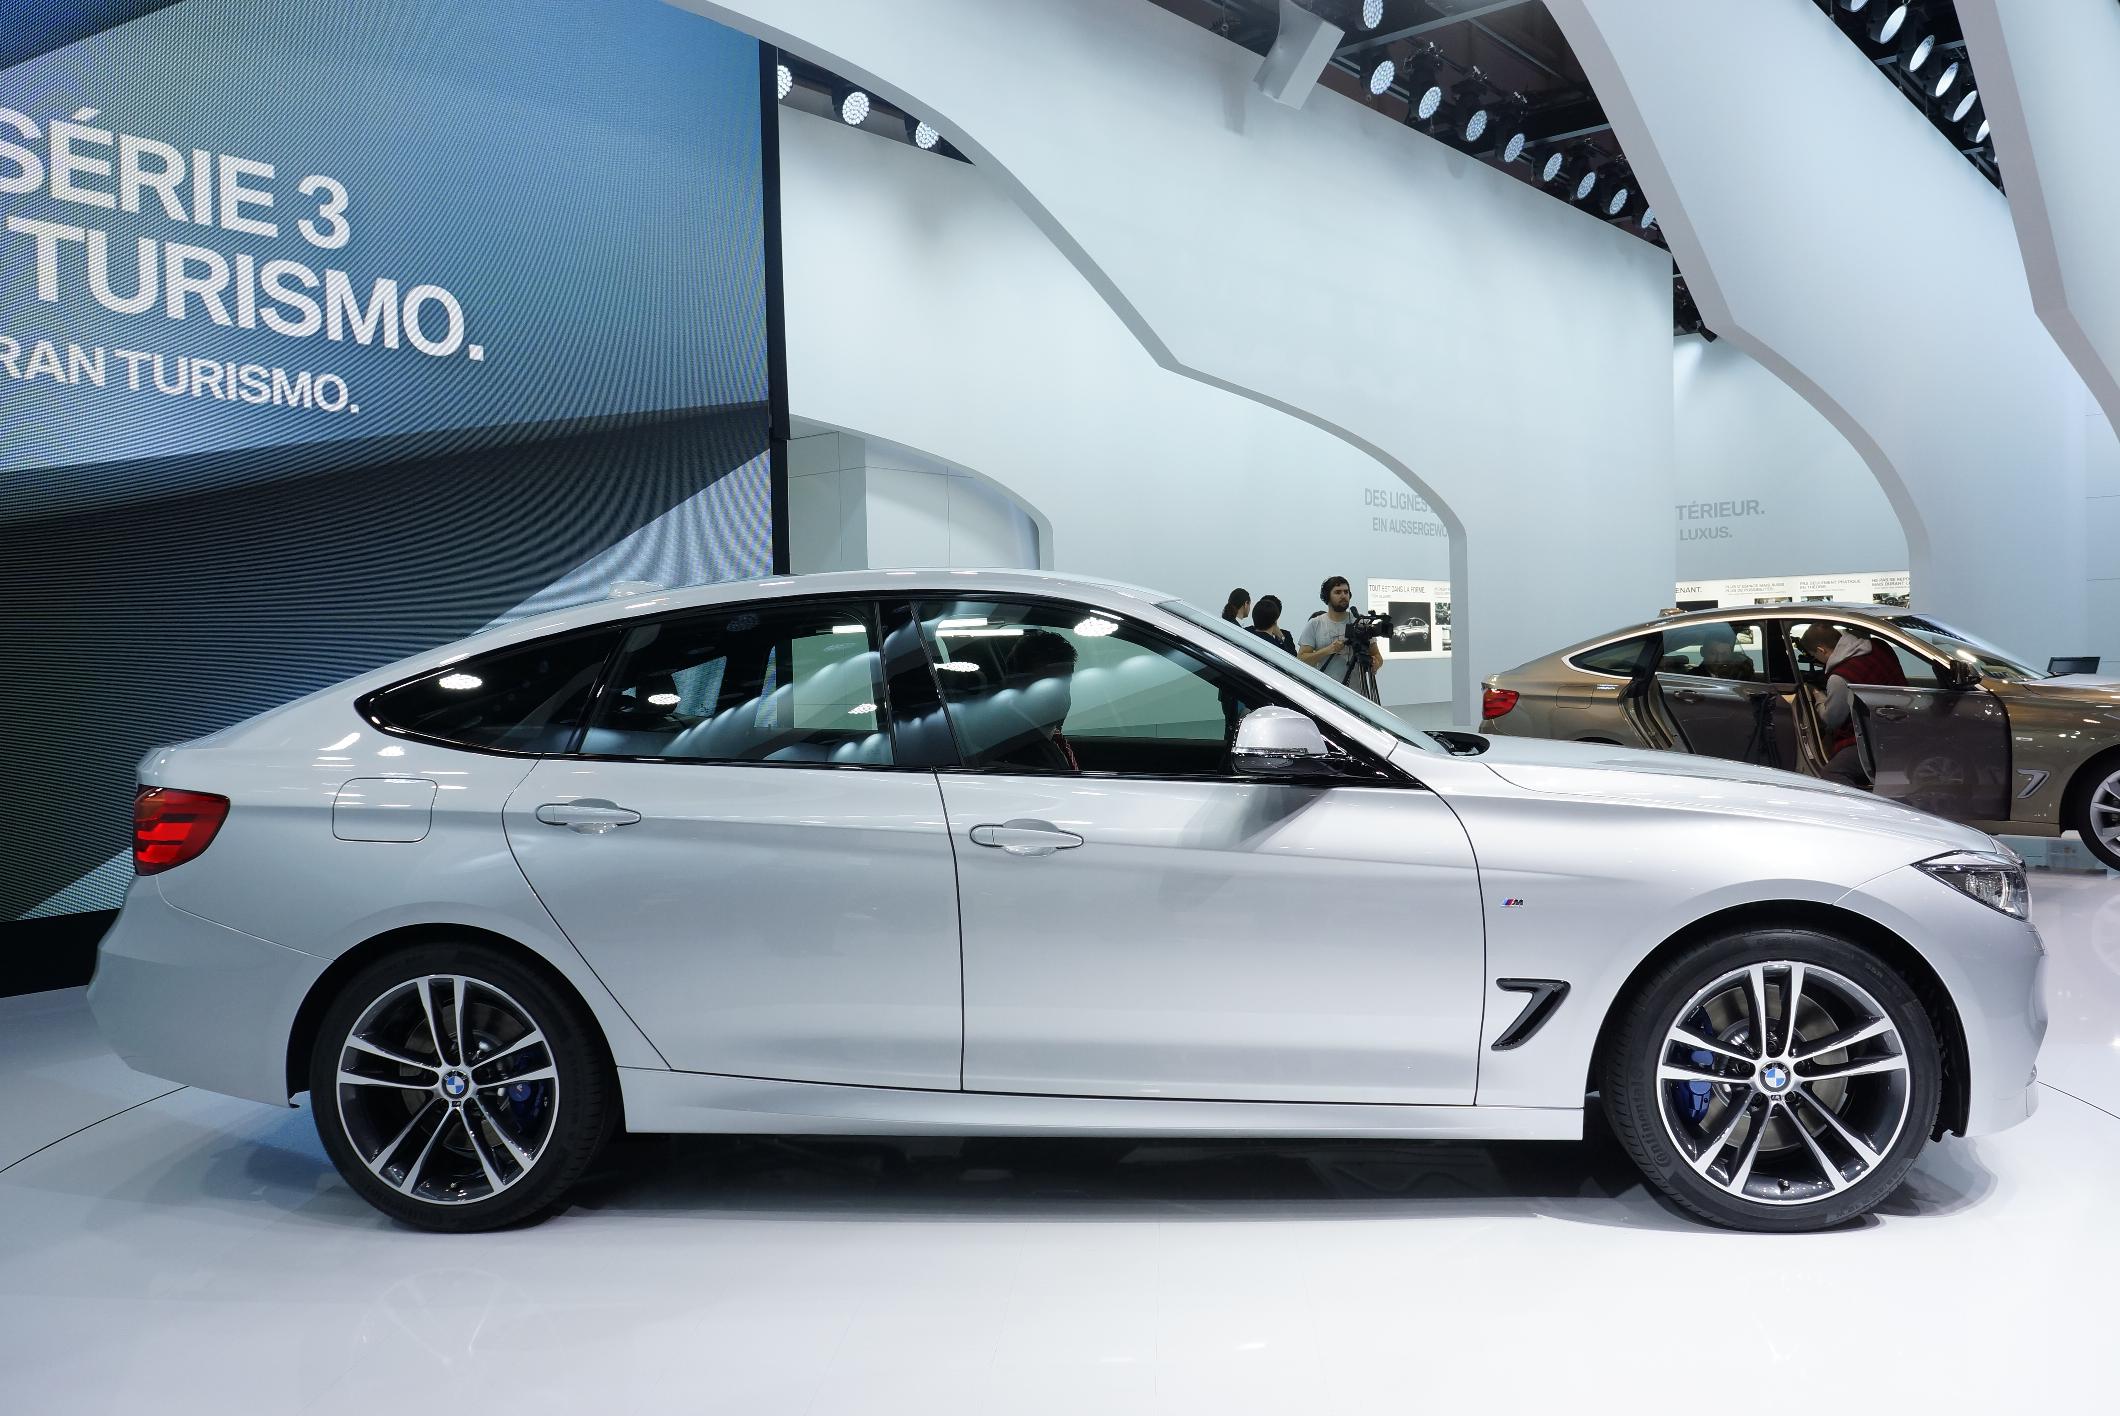 BMW-335i-Gran-Turismo-live-premiere-at-2013-Geneva-Motor-Show-14.jpg